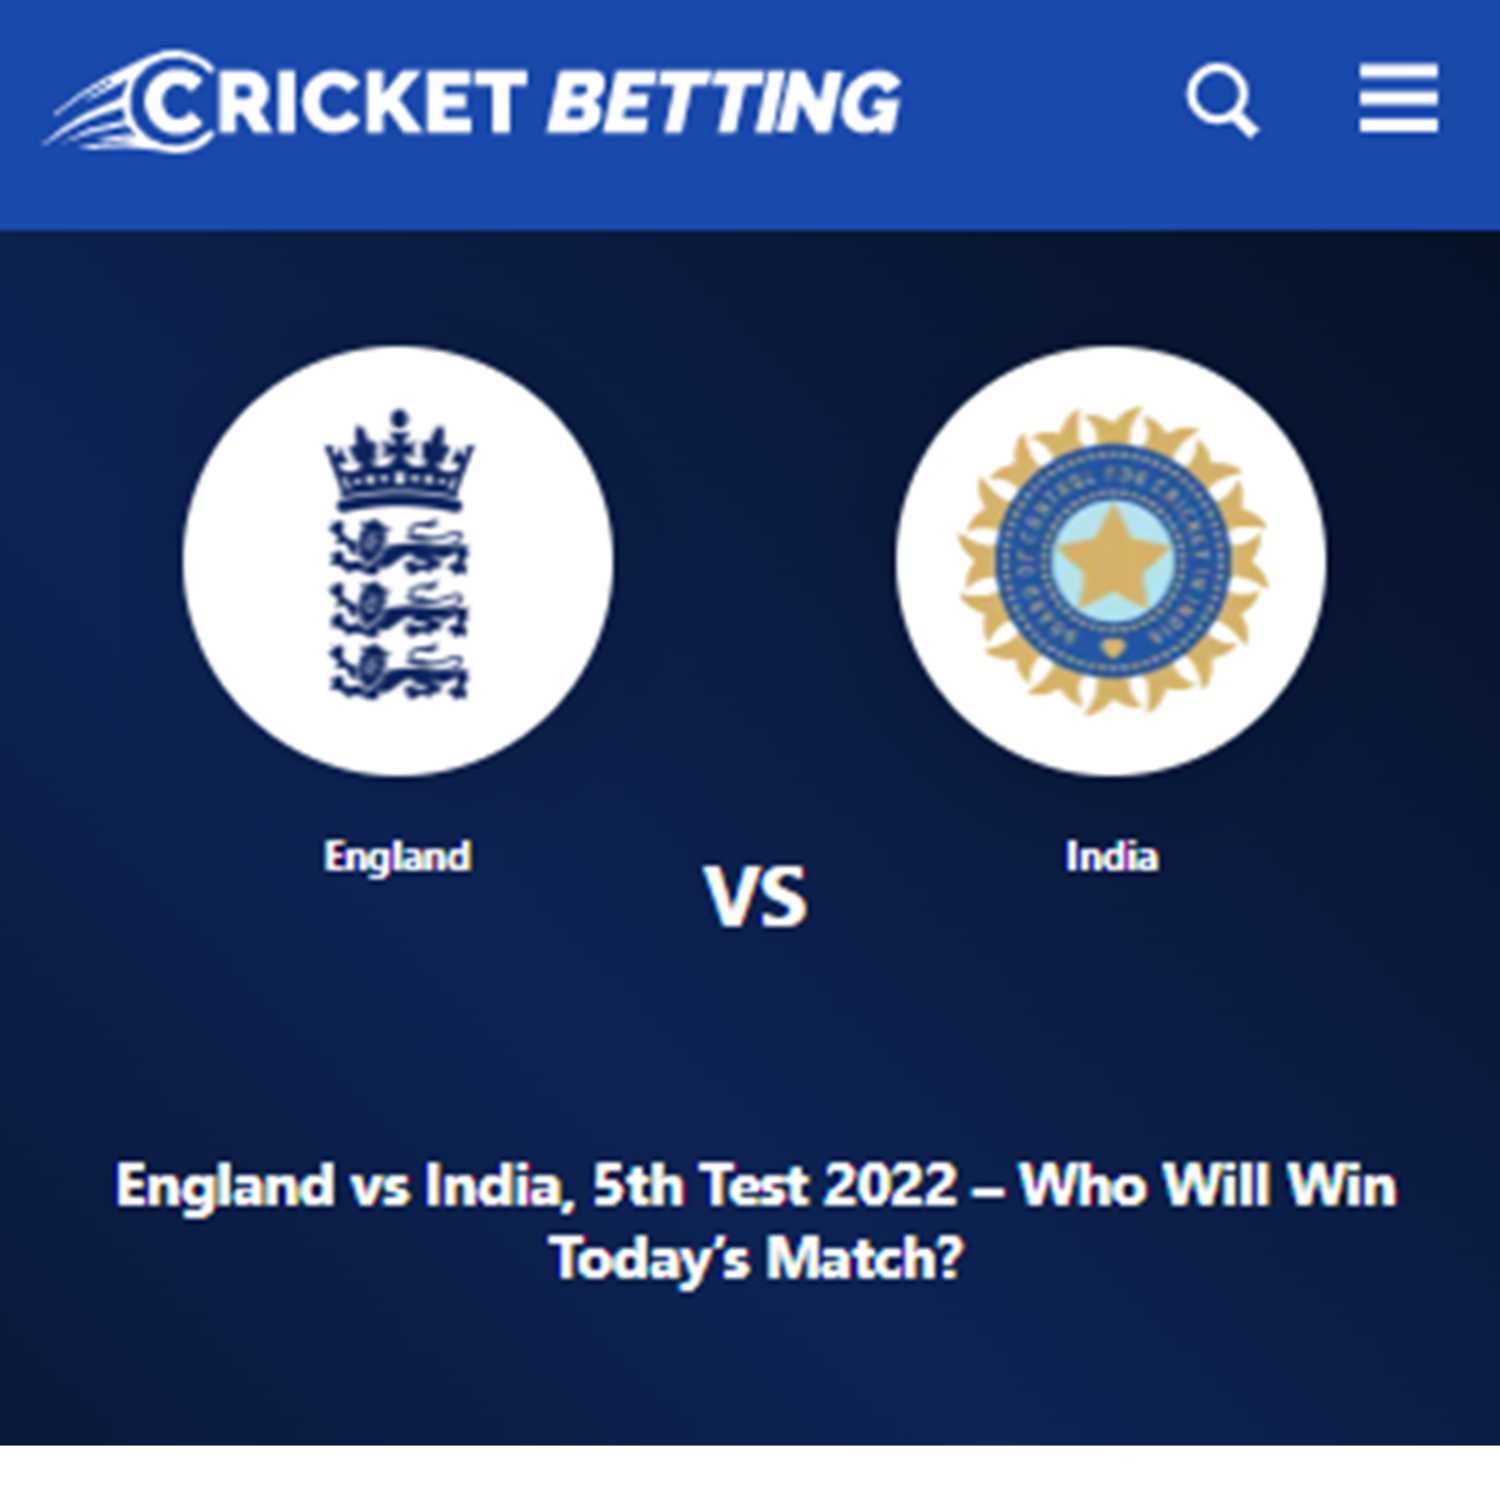 England vs India, 5th Test 2022